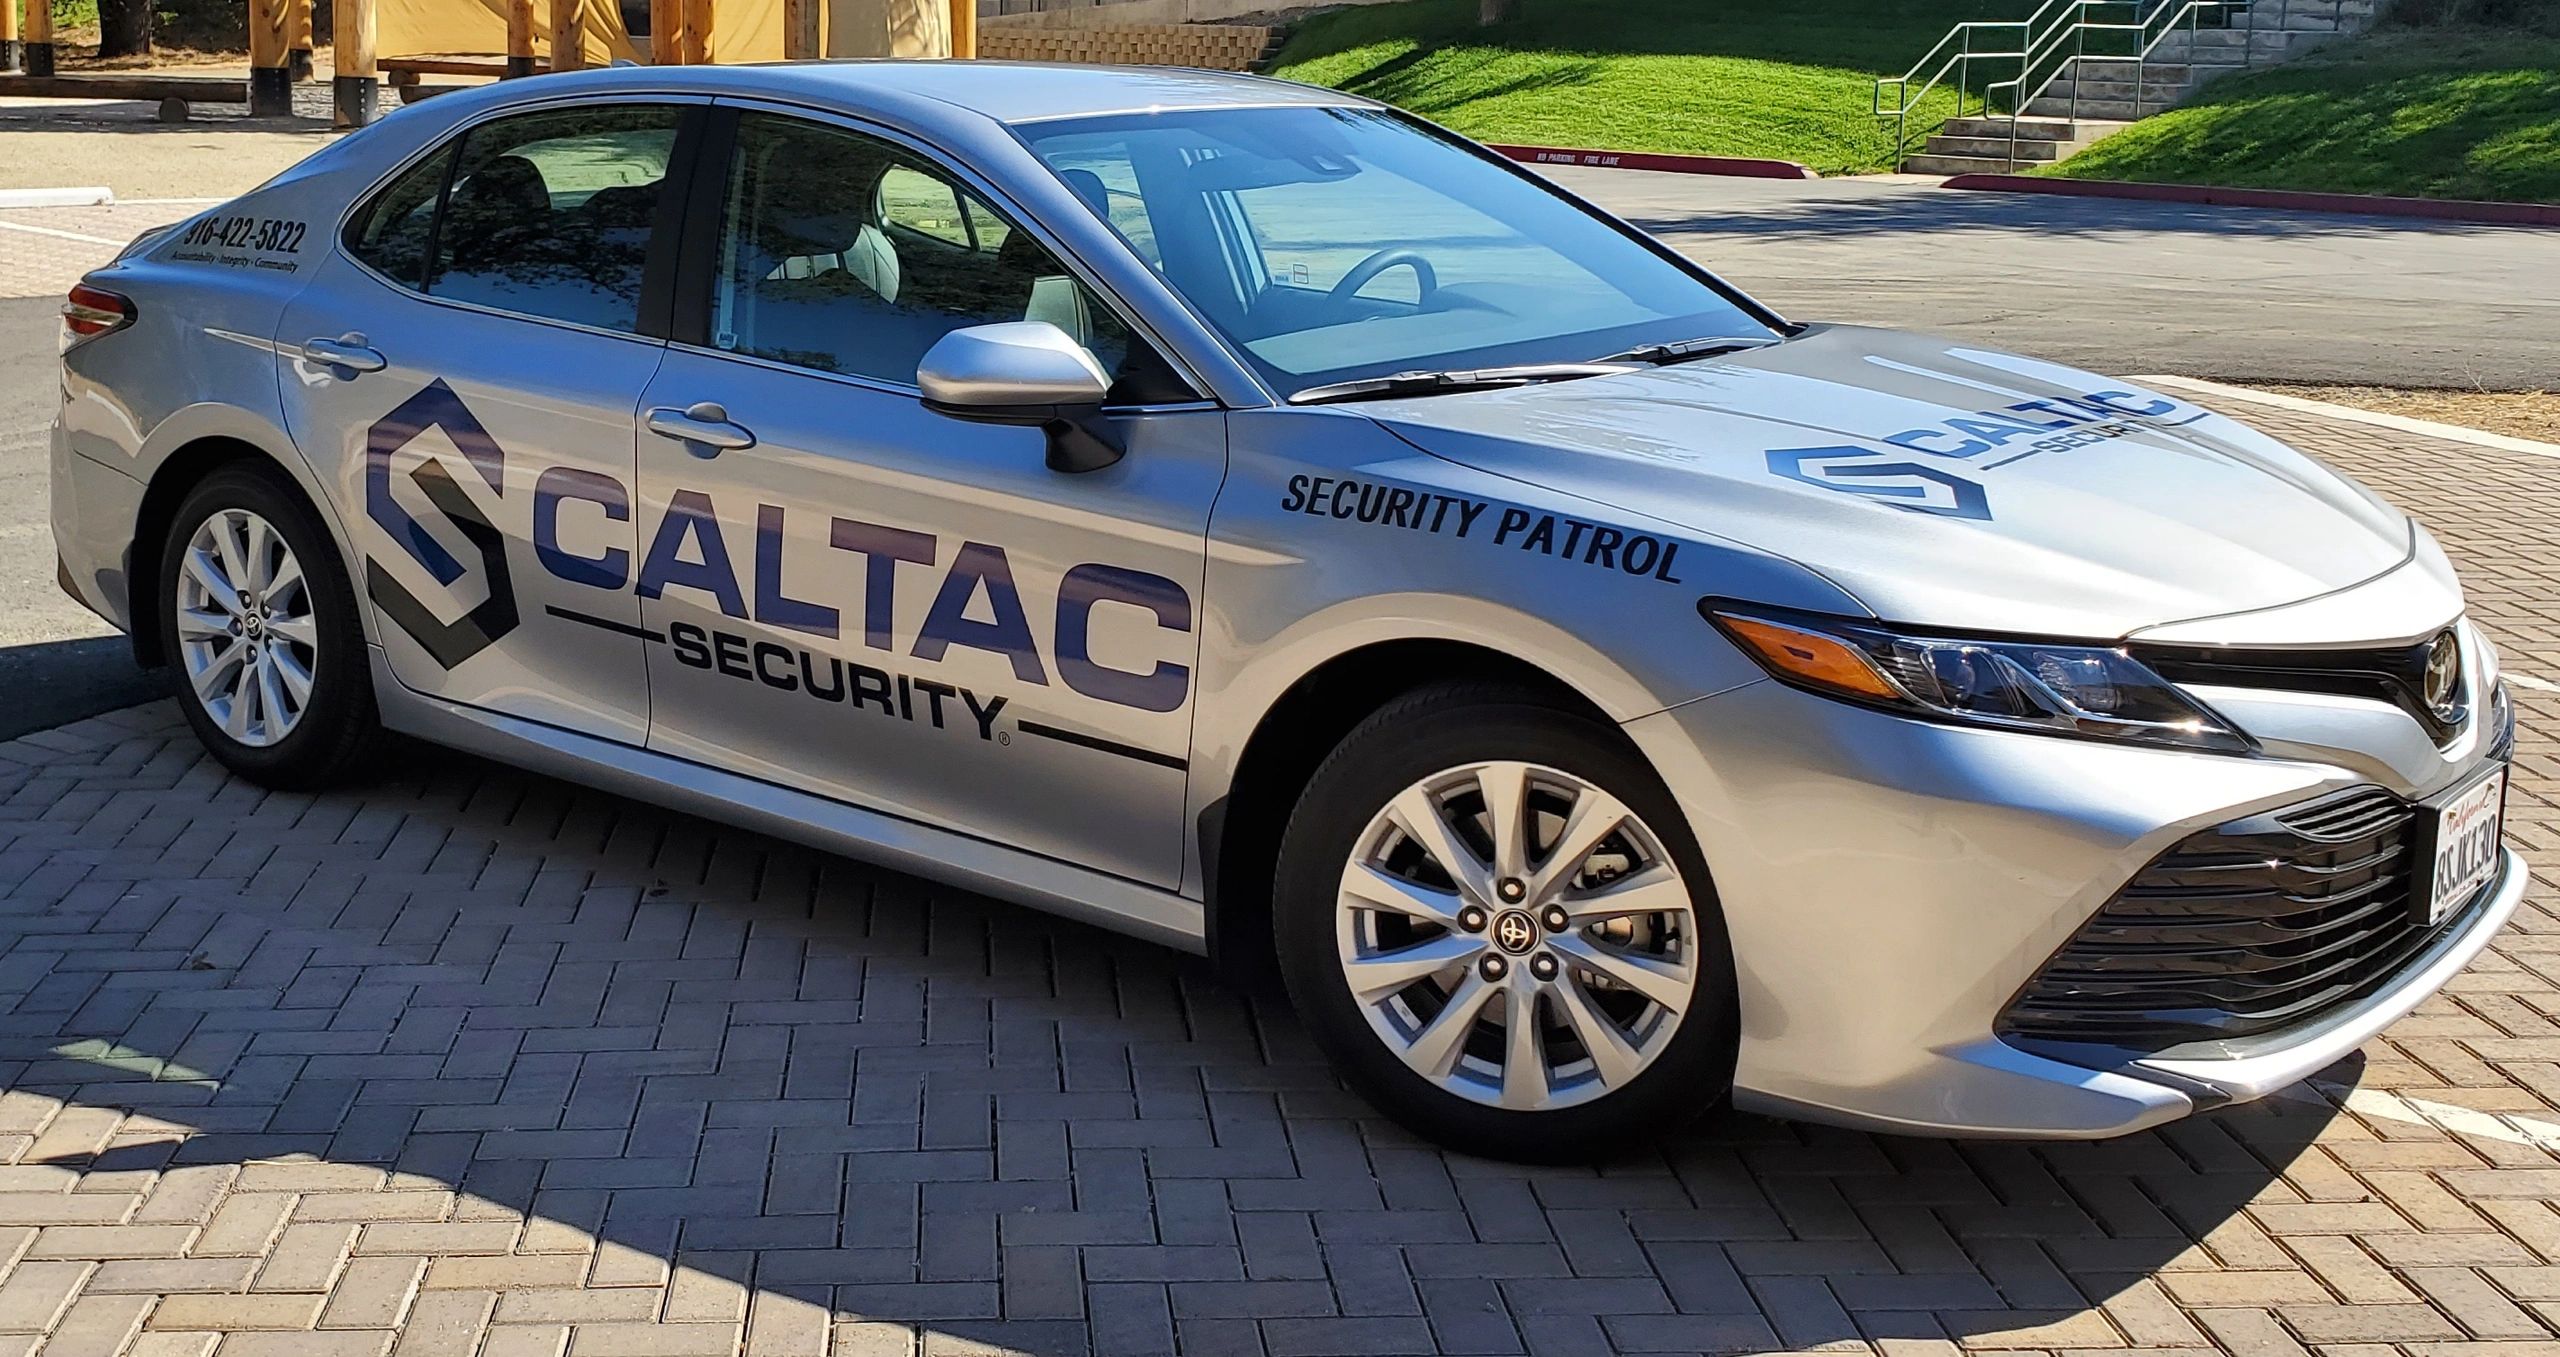 CALTAC Security Patrol Car in Roseville and Sacramento California.